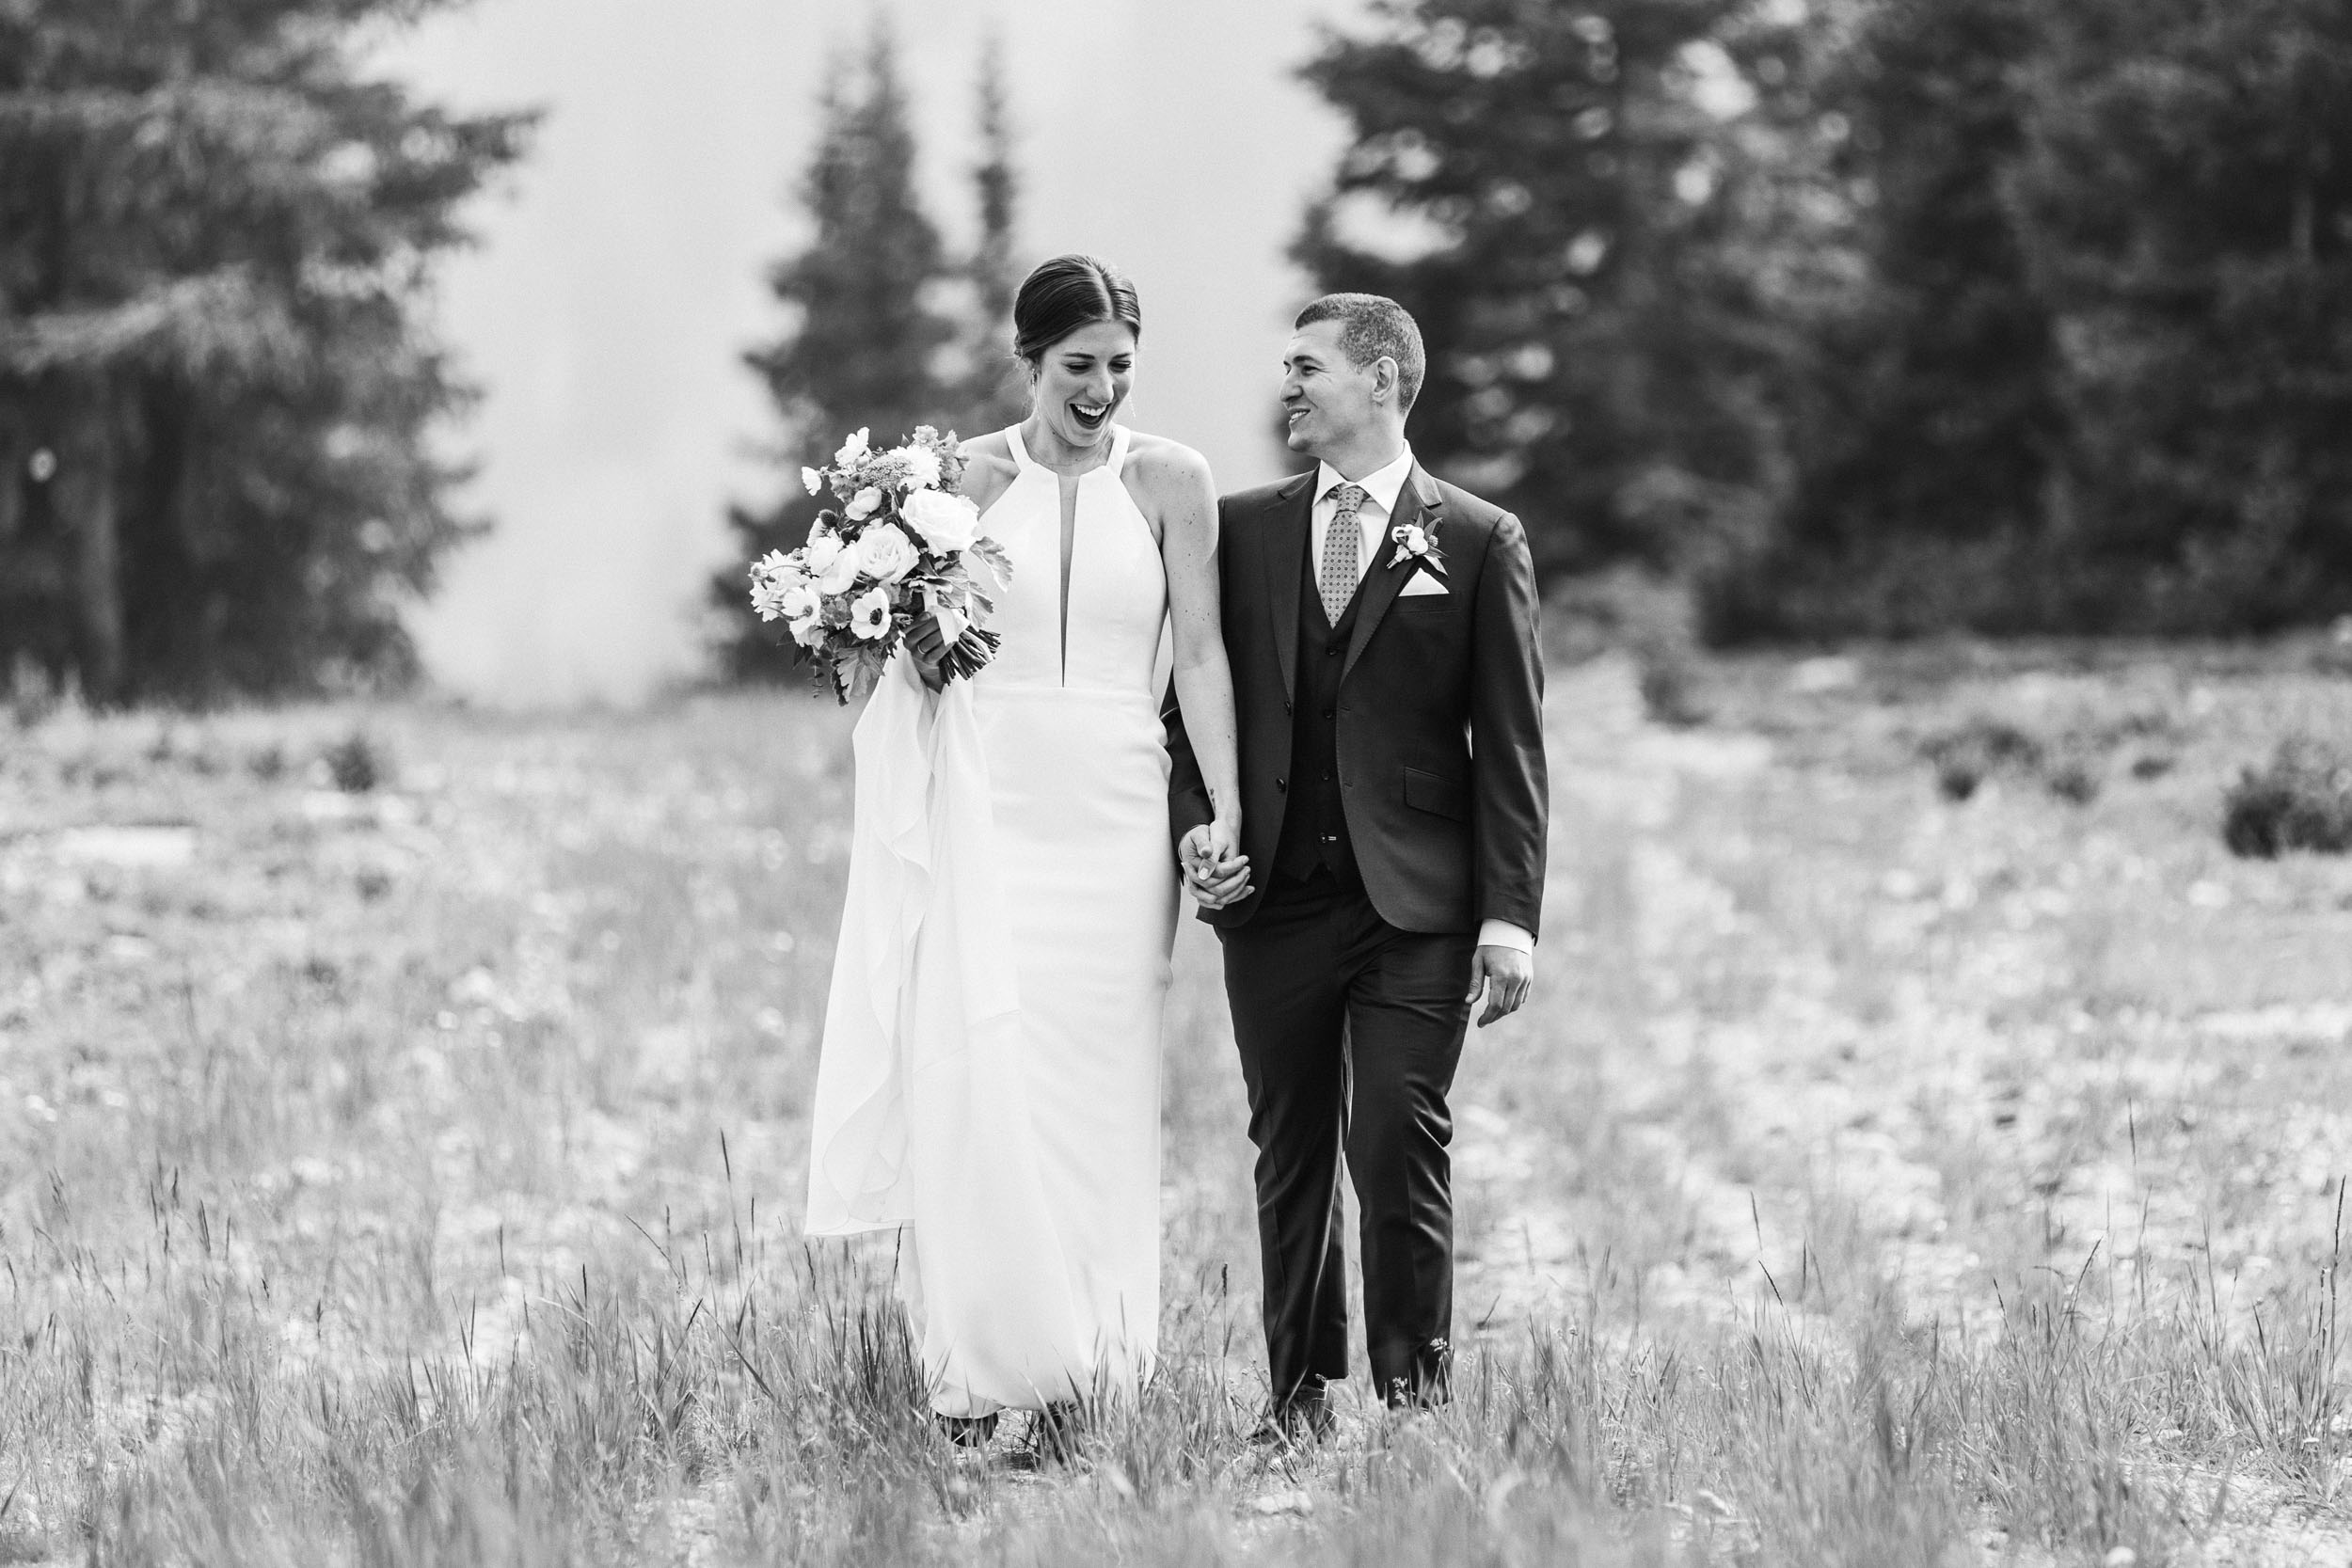 Winter Park Resort wedding photos by Shea McGrath Photography Colorado Wedding Photographer